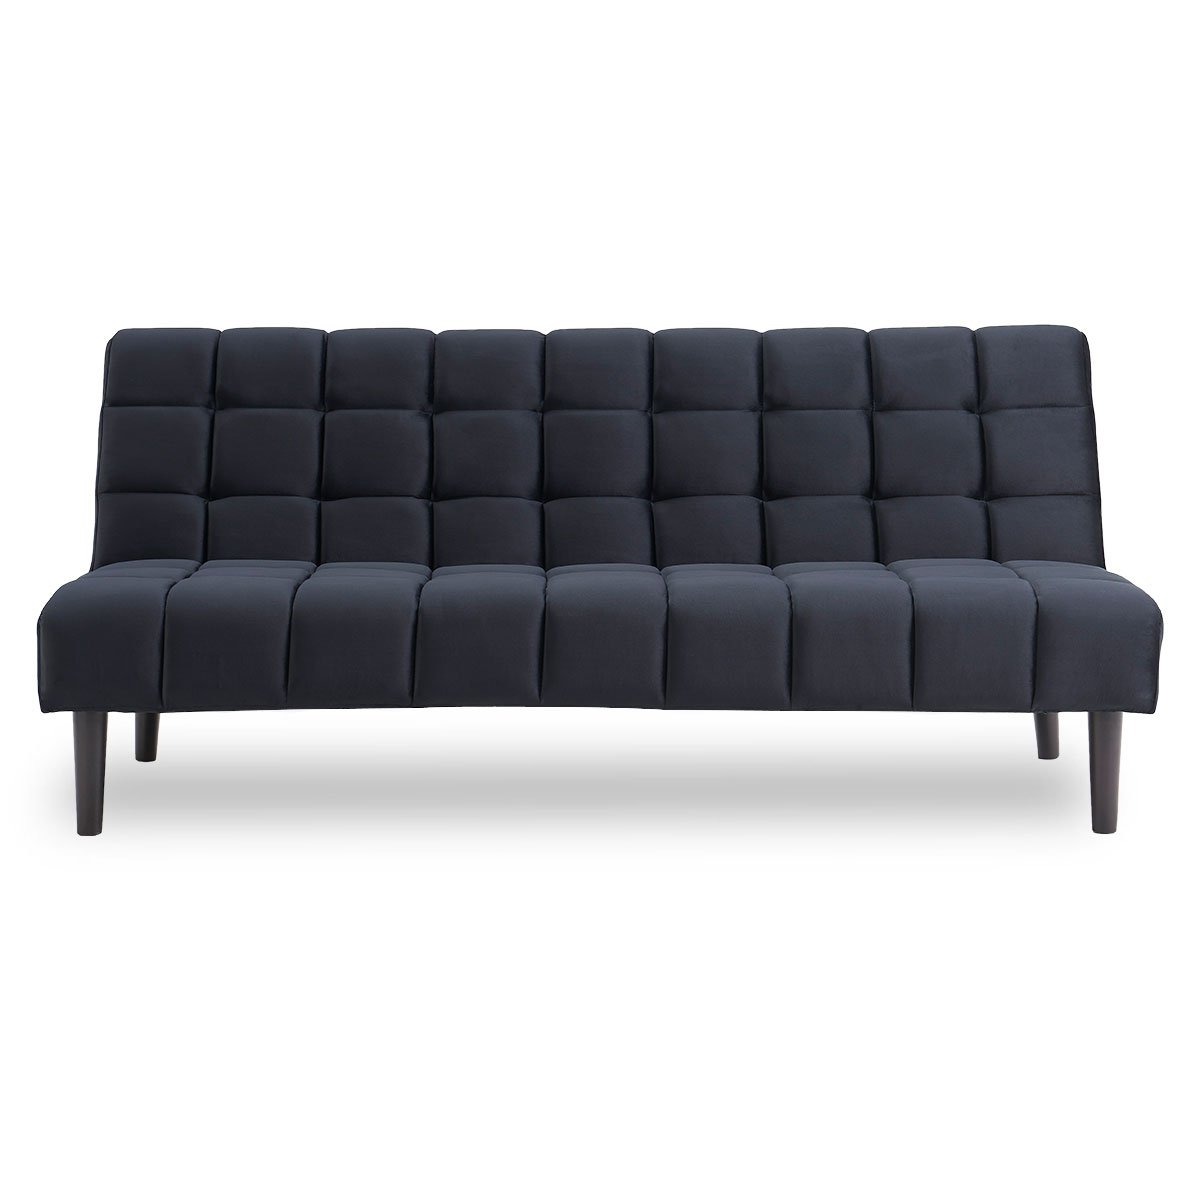 Sarantino Faux Suede Fabric Sofa Bed Furniture Lounge Seat Black 1